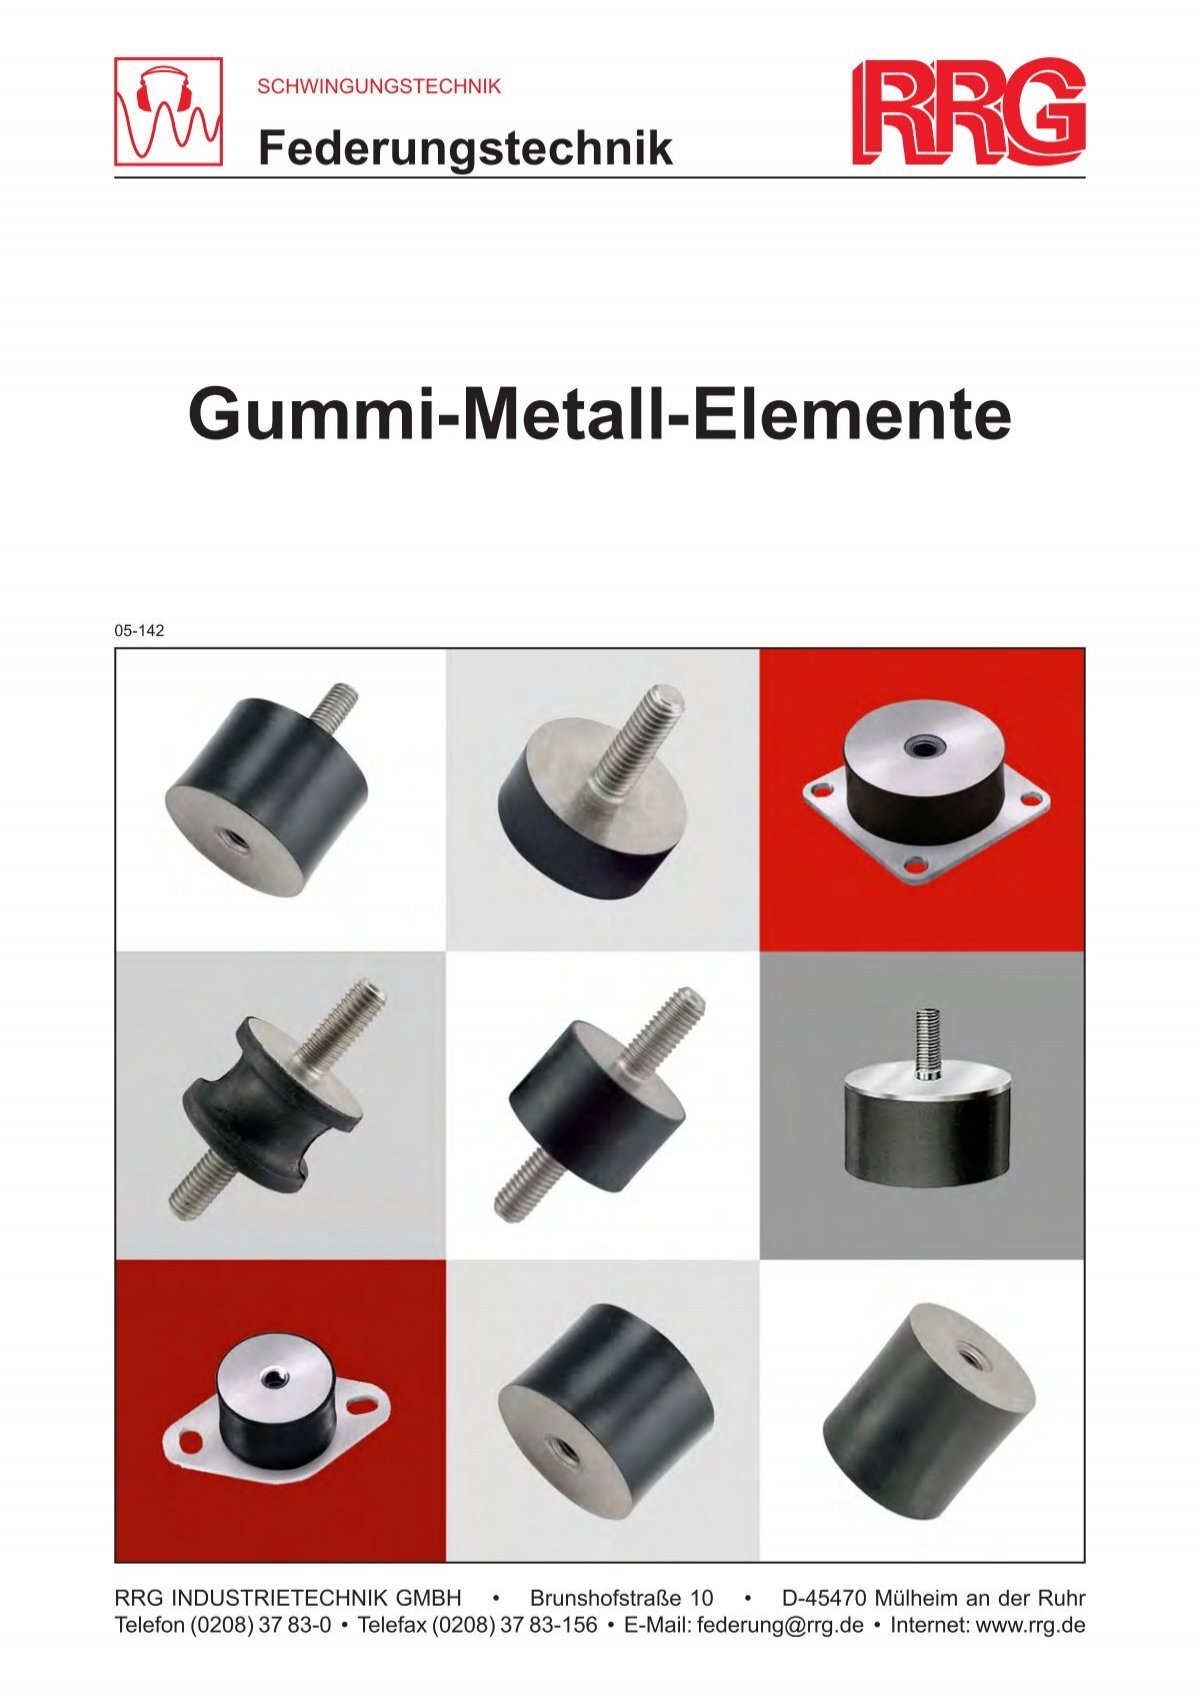 Gummi-Metall-Elemente